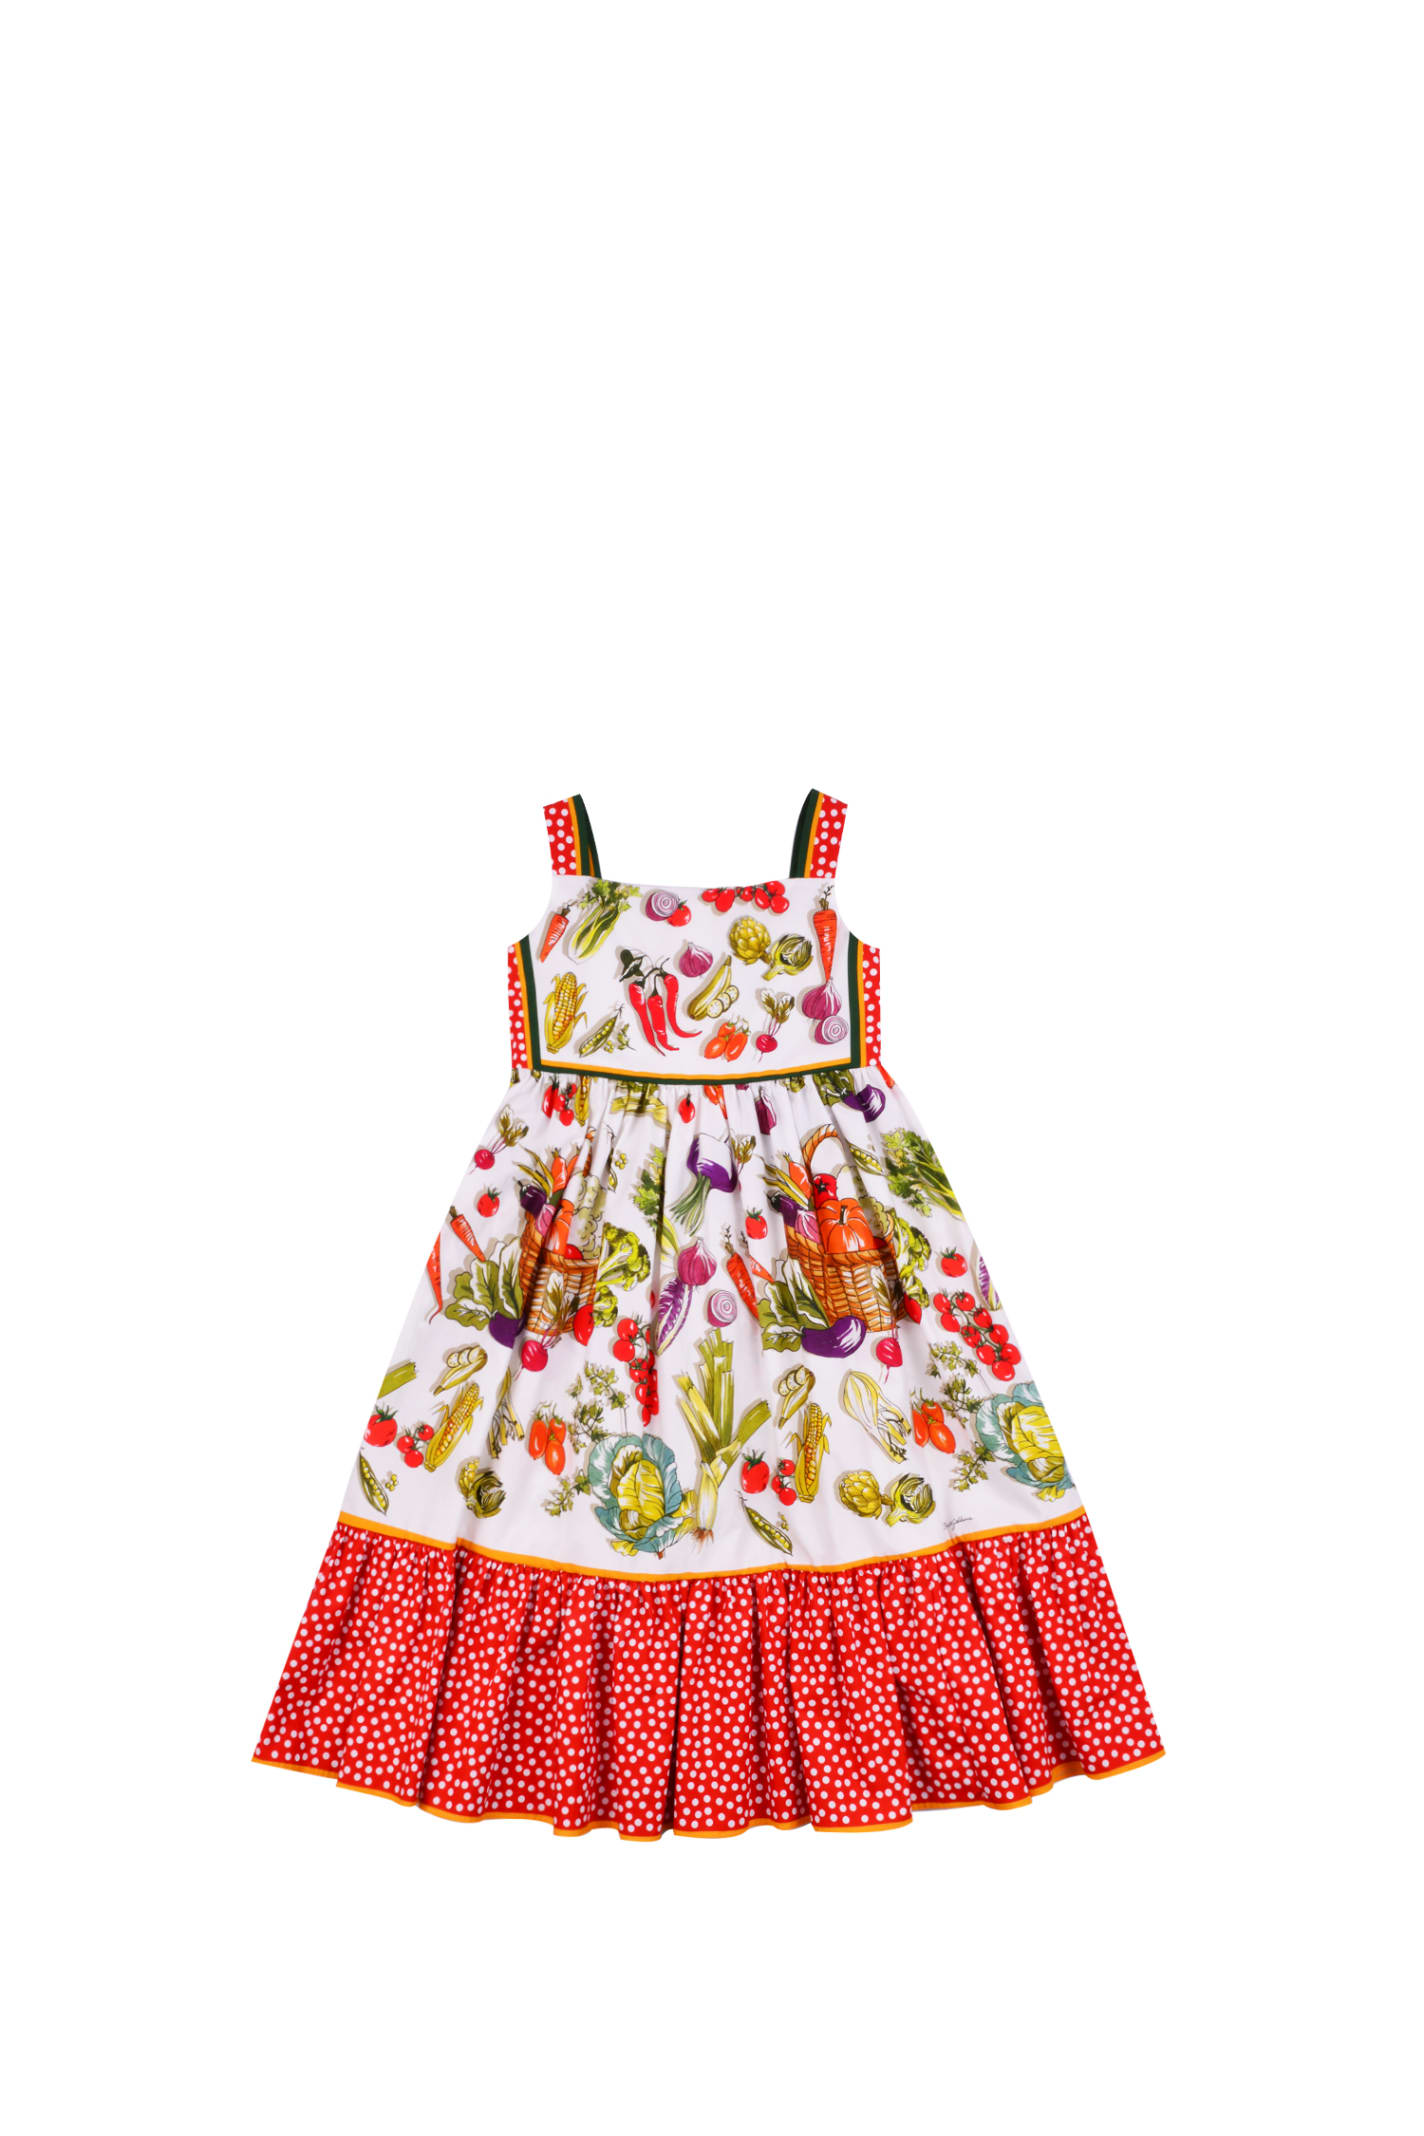 Dolce & Gabbana Vegetable Print Poplin Dress